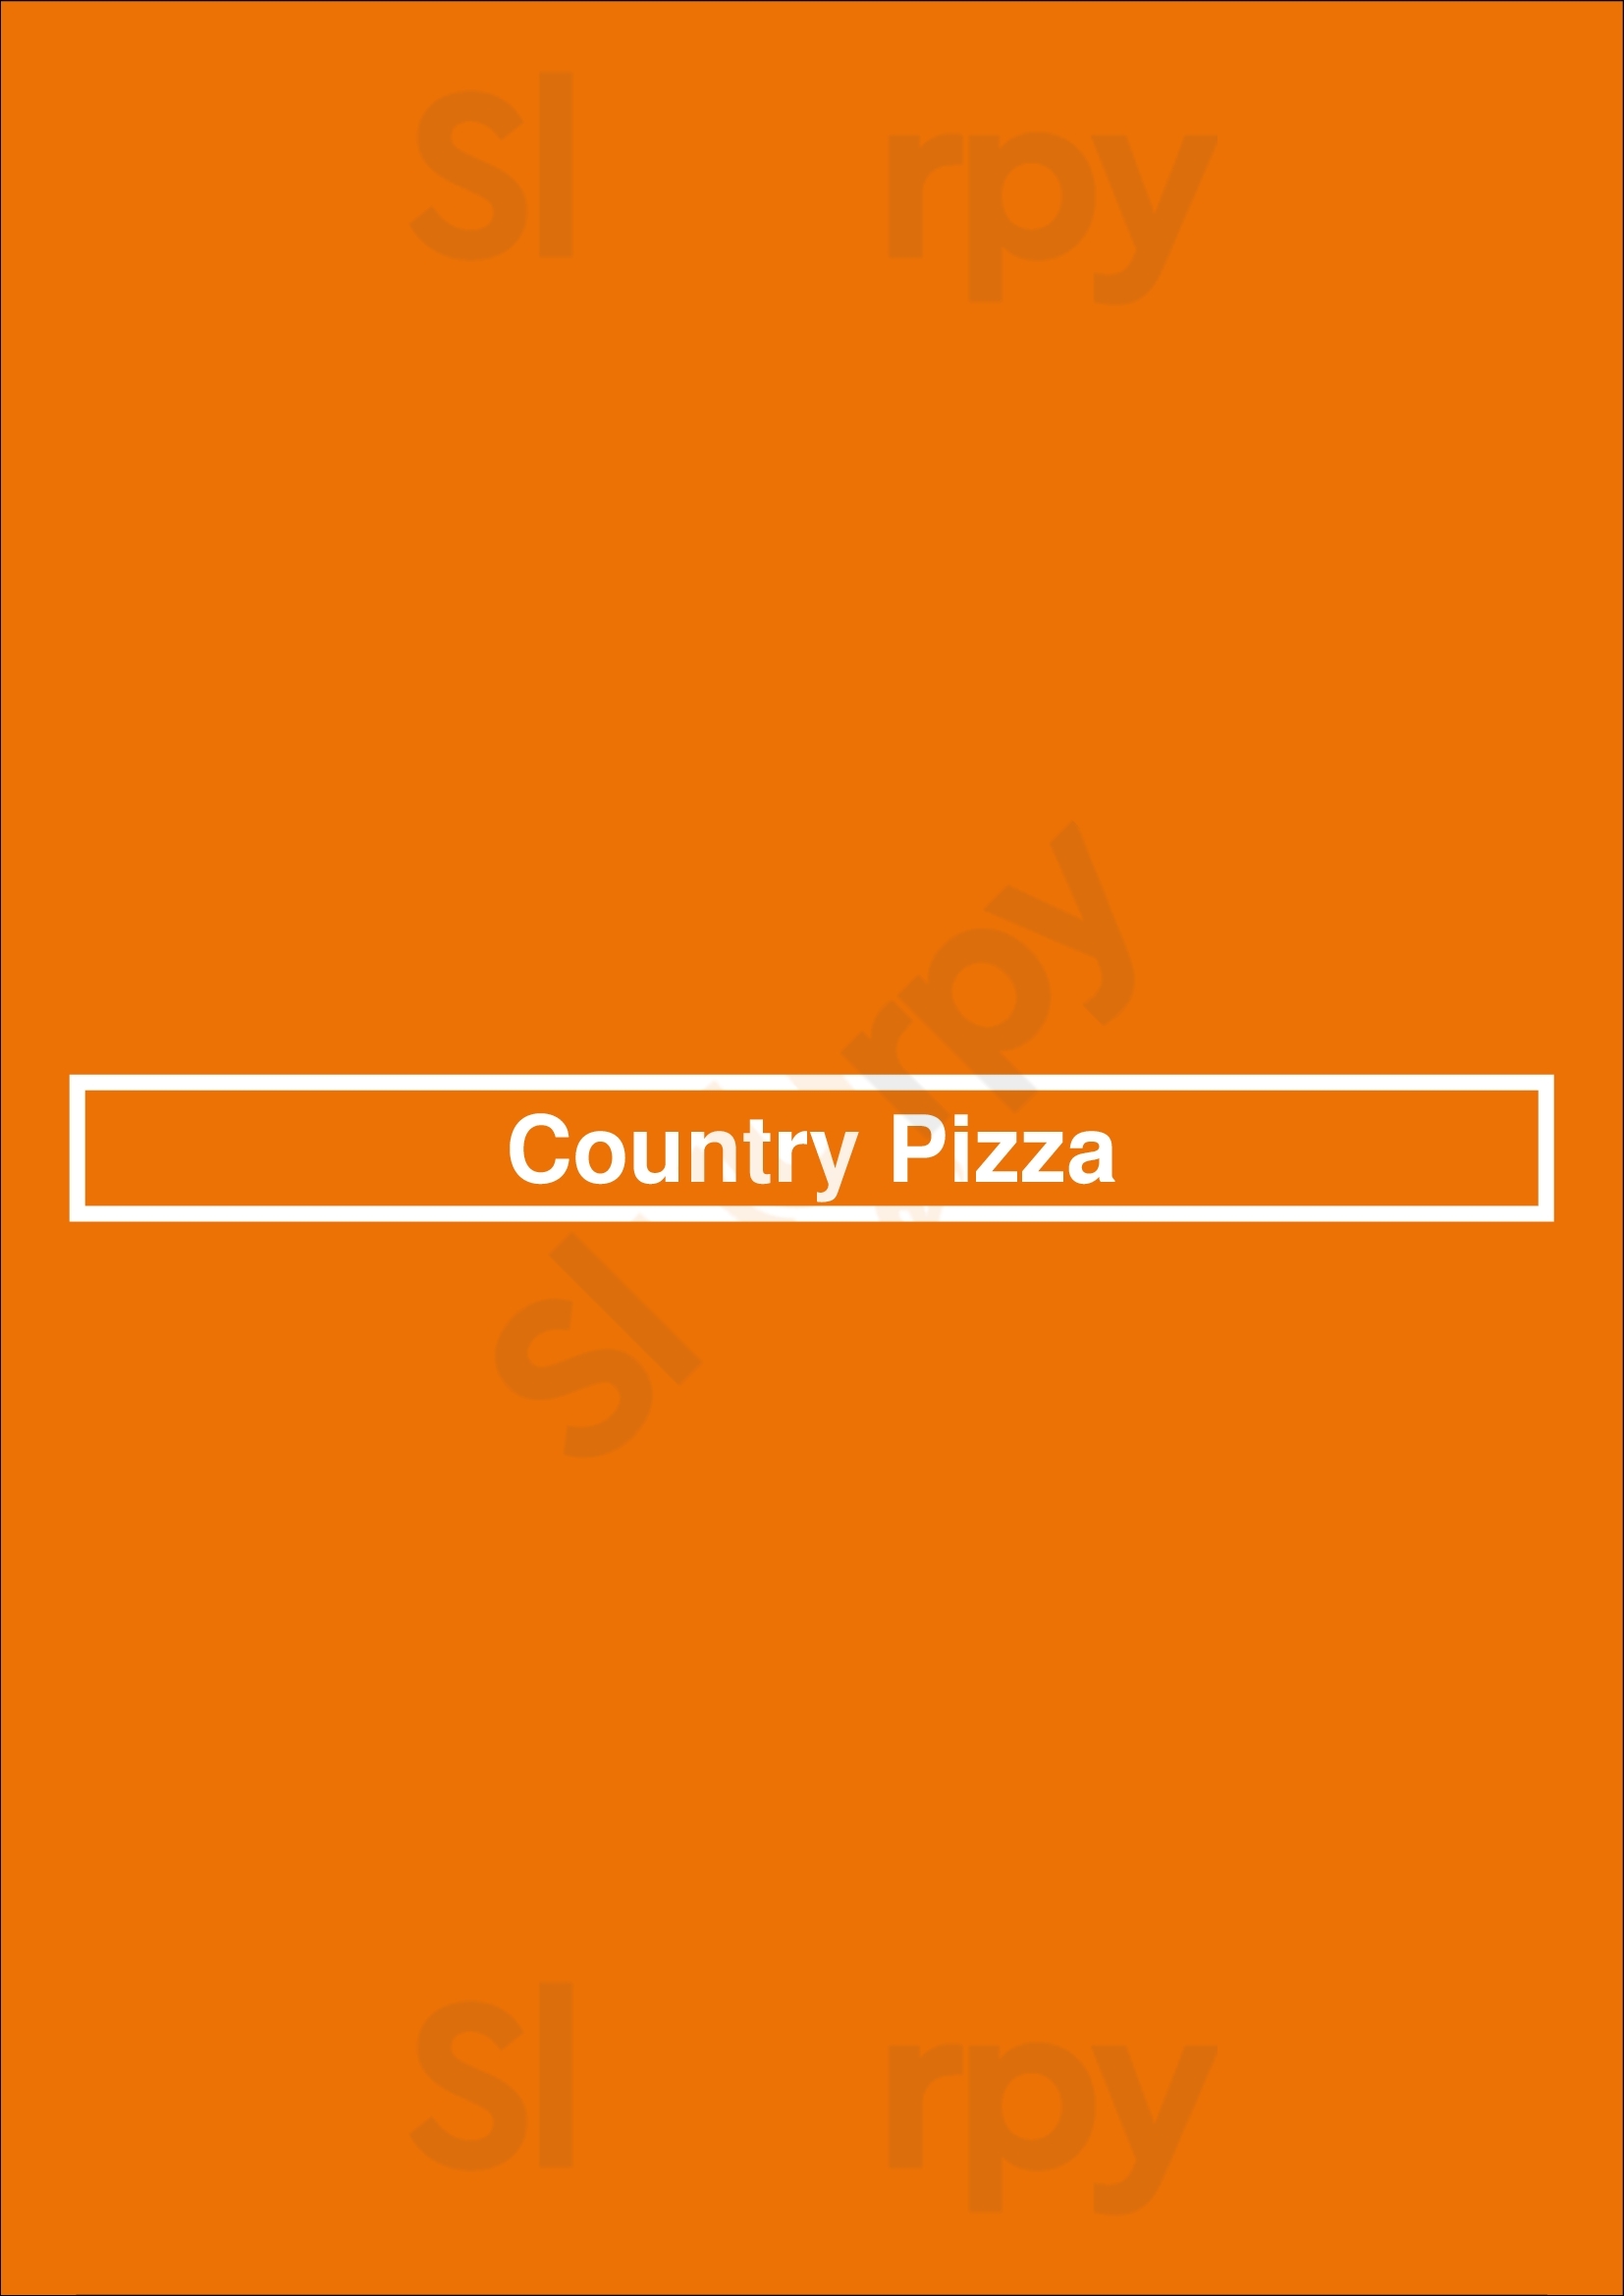 Country Pizza Calgary Menu - 1